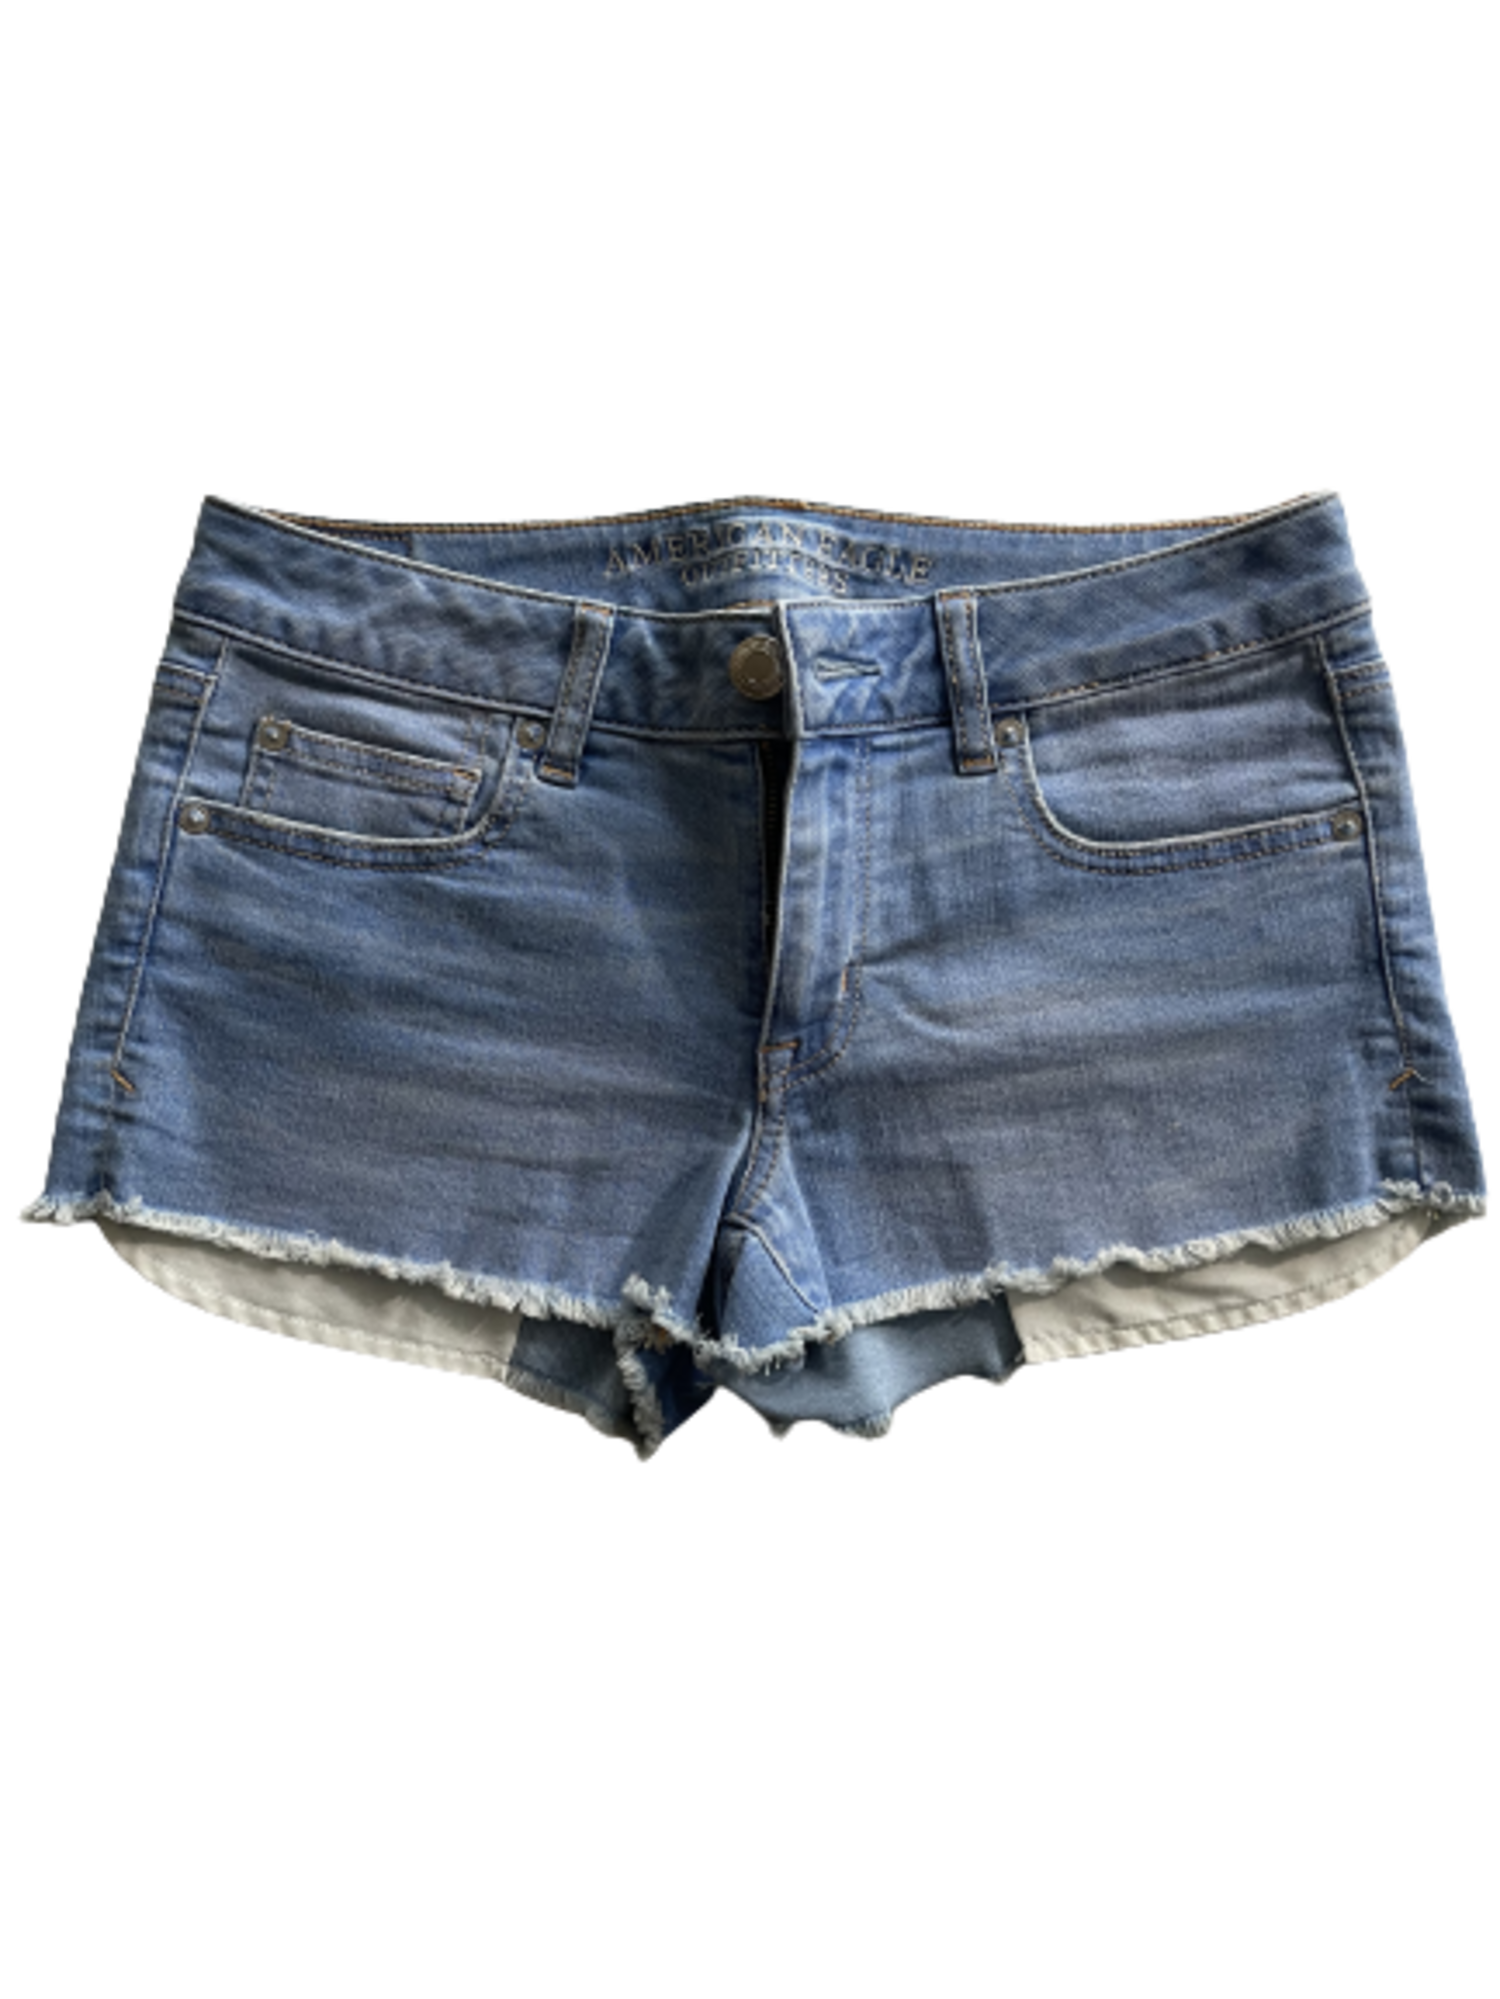 Short jeans American Eagle - UK 10, buy pre-owned at 36 EUR